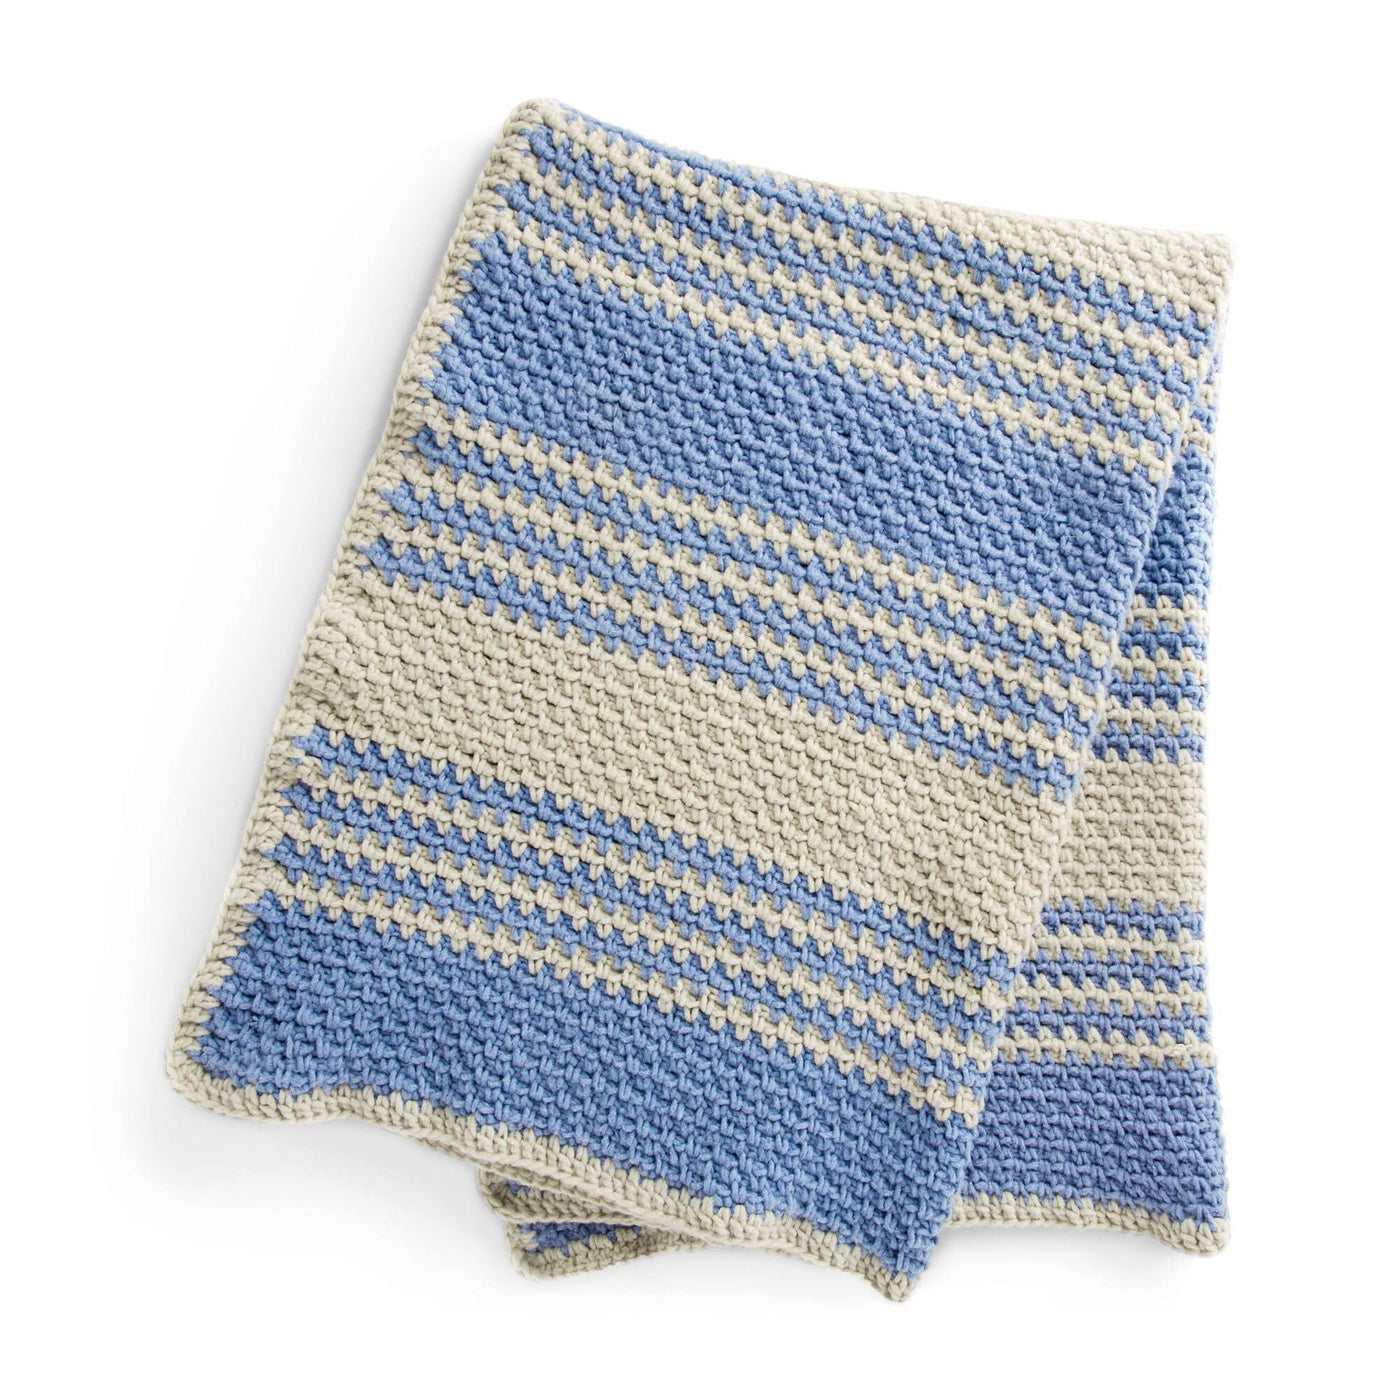 CROCHET PATTERN DOWNLOAD - Bernat Forever Fleece Linen Stitch Stripes Crochet Blanket